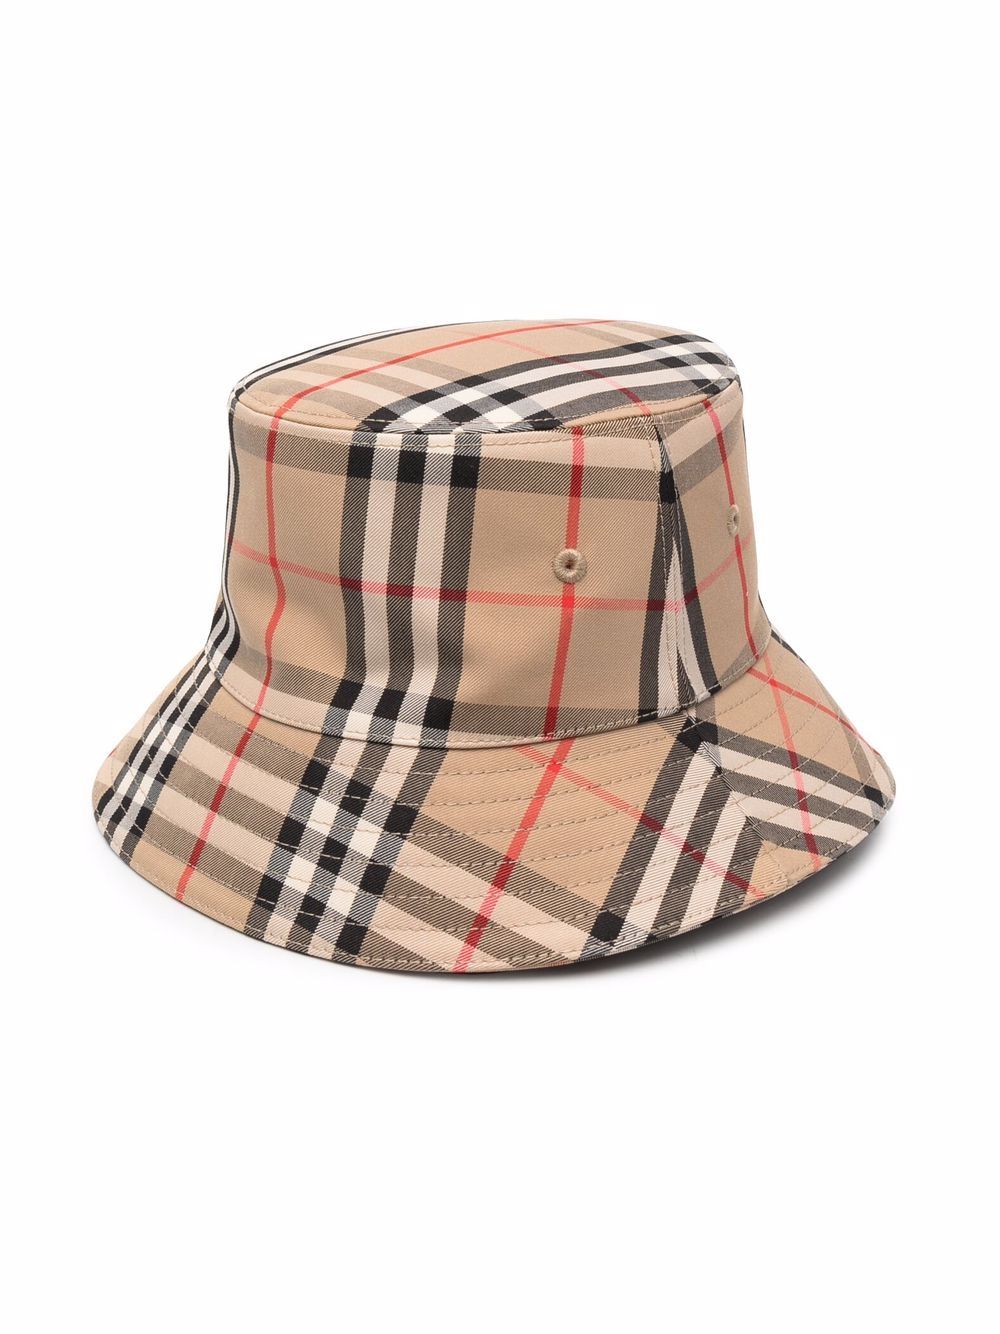 Burberry Kids check-print bucket hat